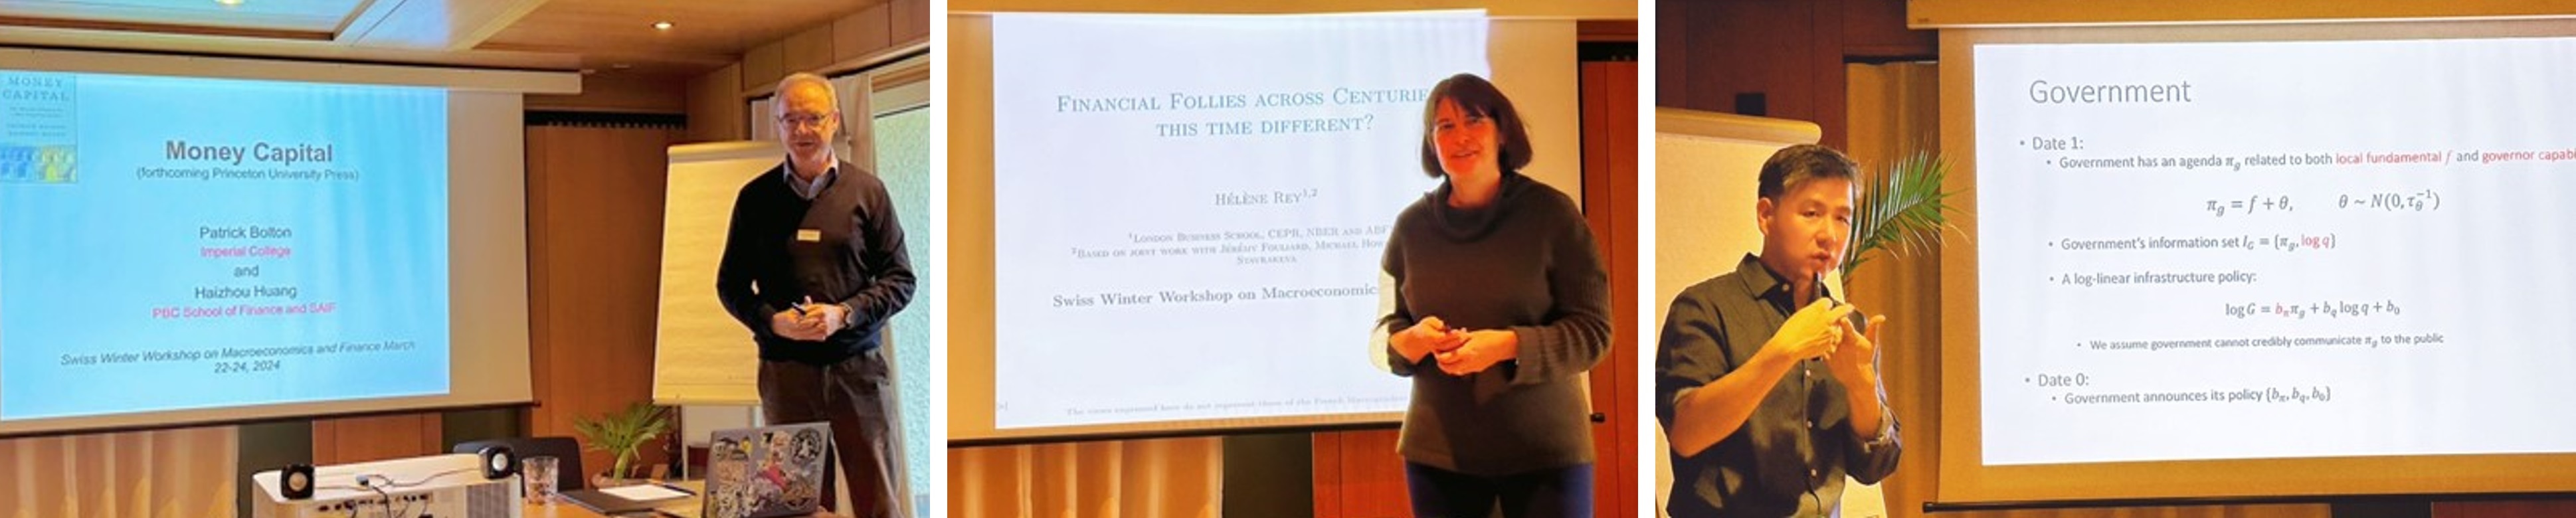 Key notes_Swiss Winter Workshop on Macroeconomics and Finance_202403_online